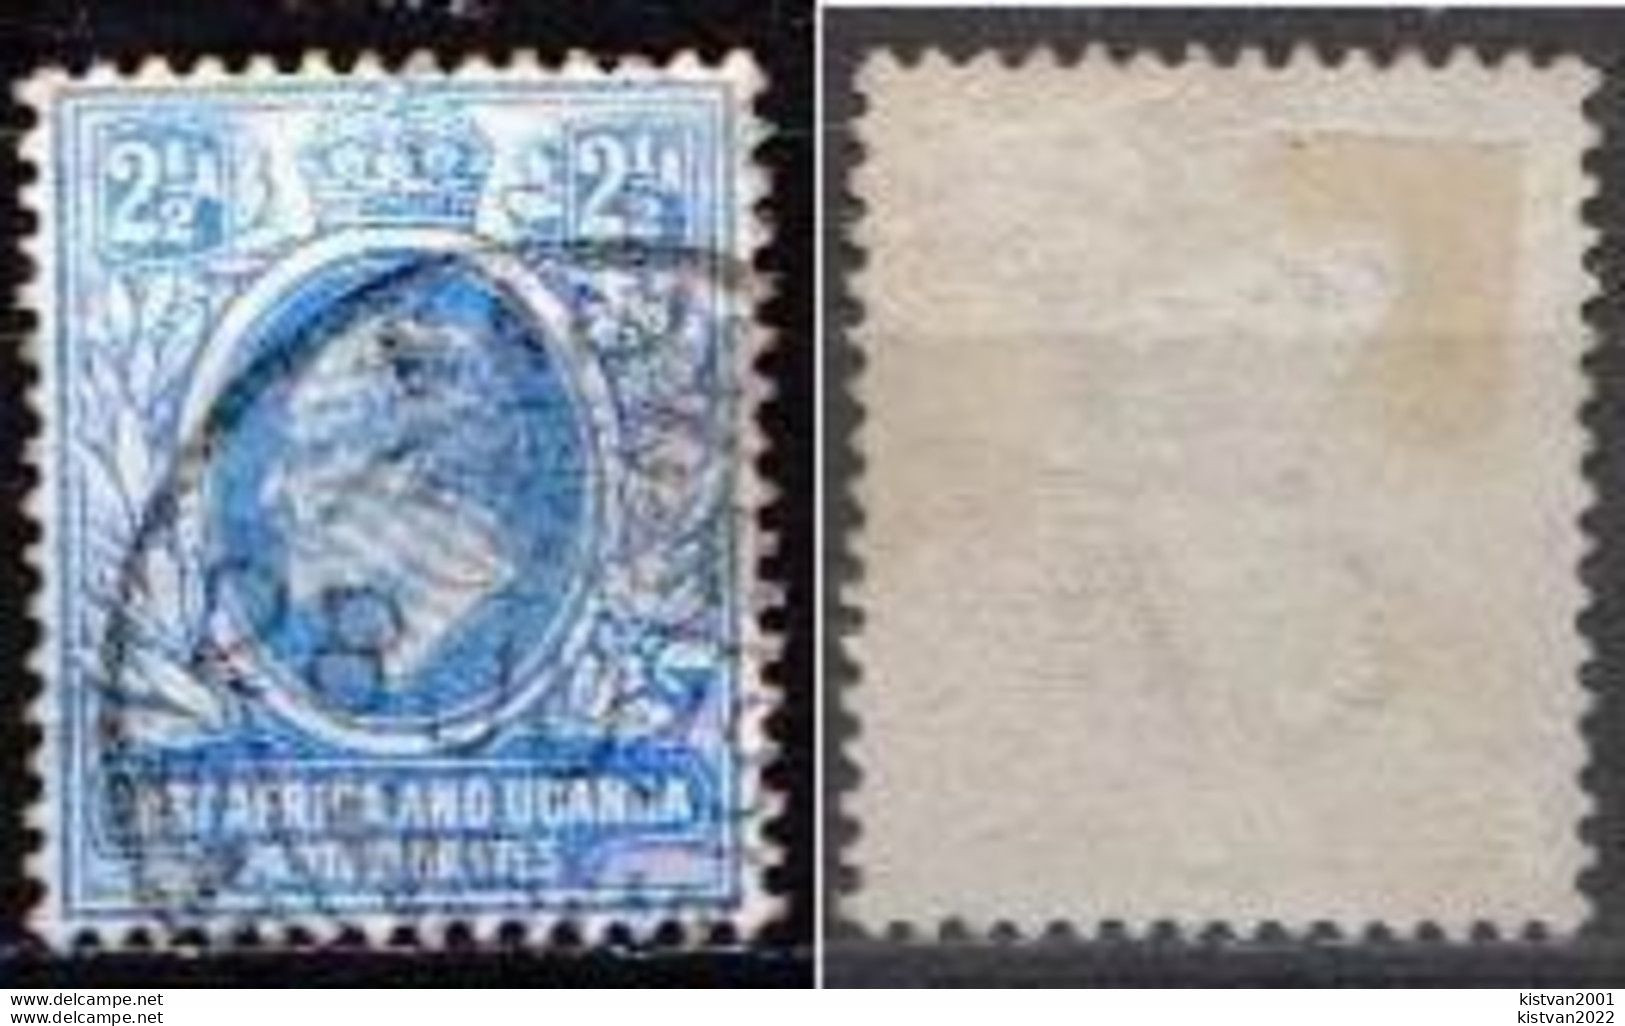 East Africa & Uganda Protectorates Used Stamps, WM 2 - East Africa & Uganda Protectorates